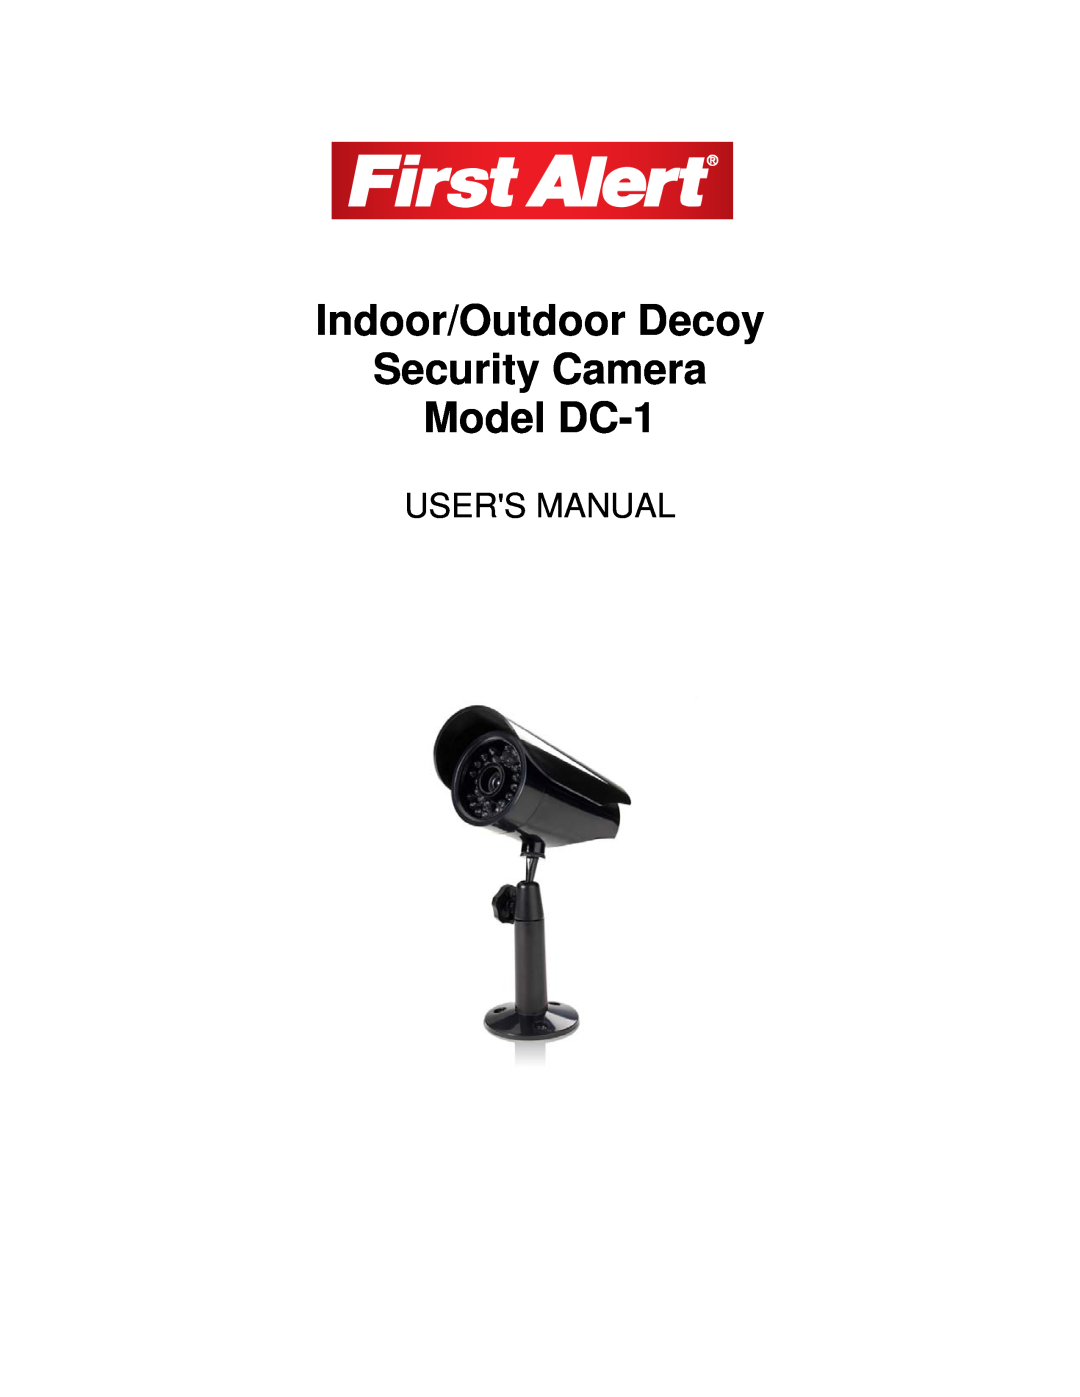 First Alert user manual Indoor/Outdoor Decoy Security Camera Model DC-1, Users Manual 